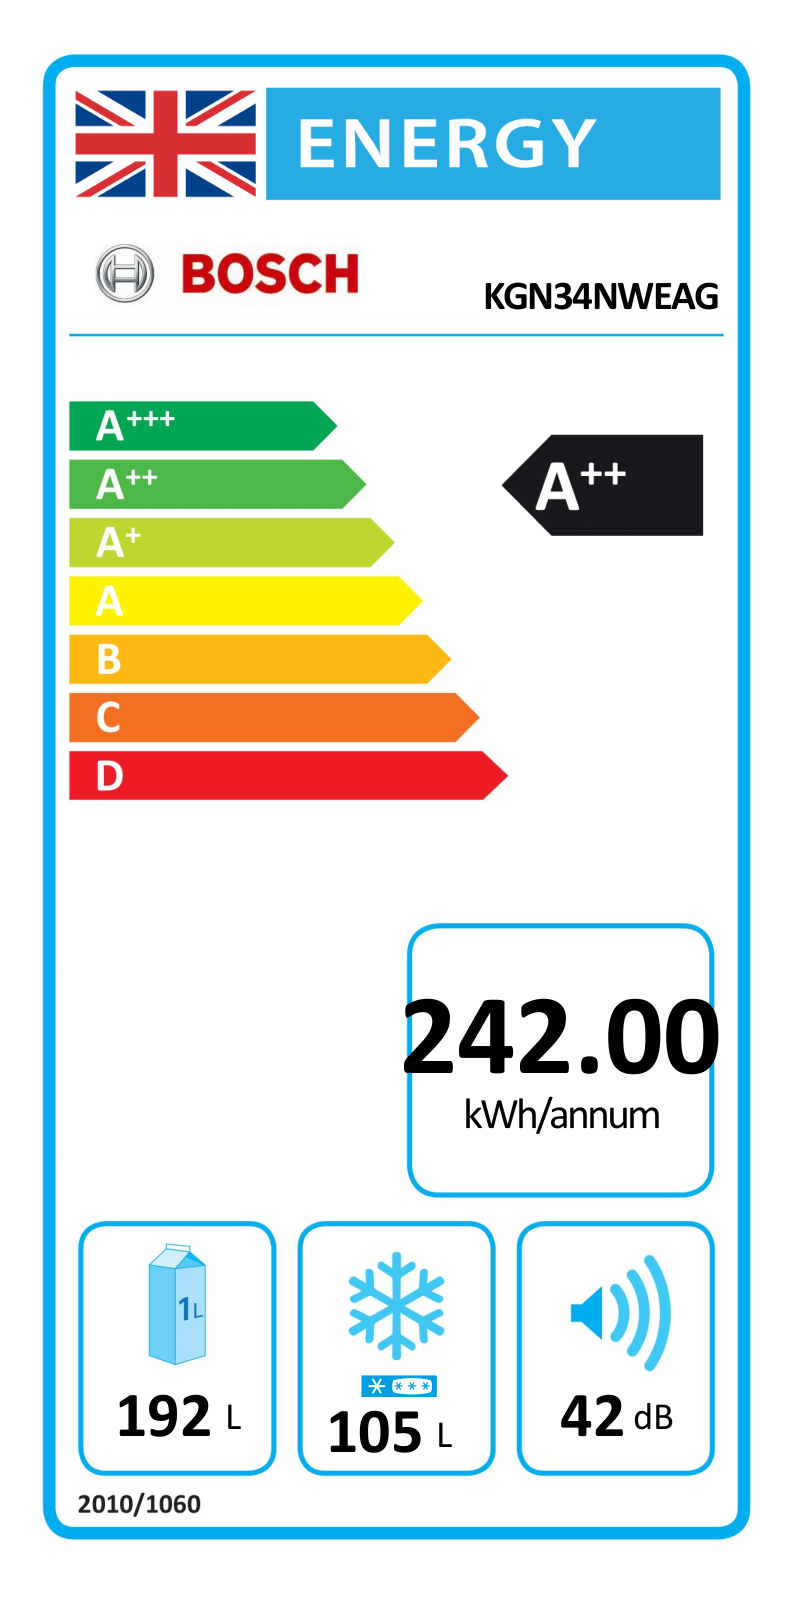 Bosch KGN34NWEAG EU Energy Label